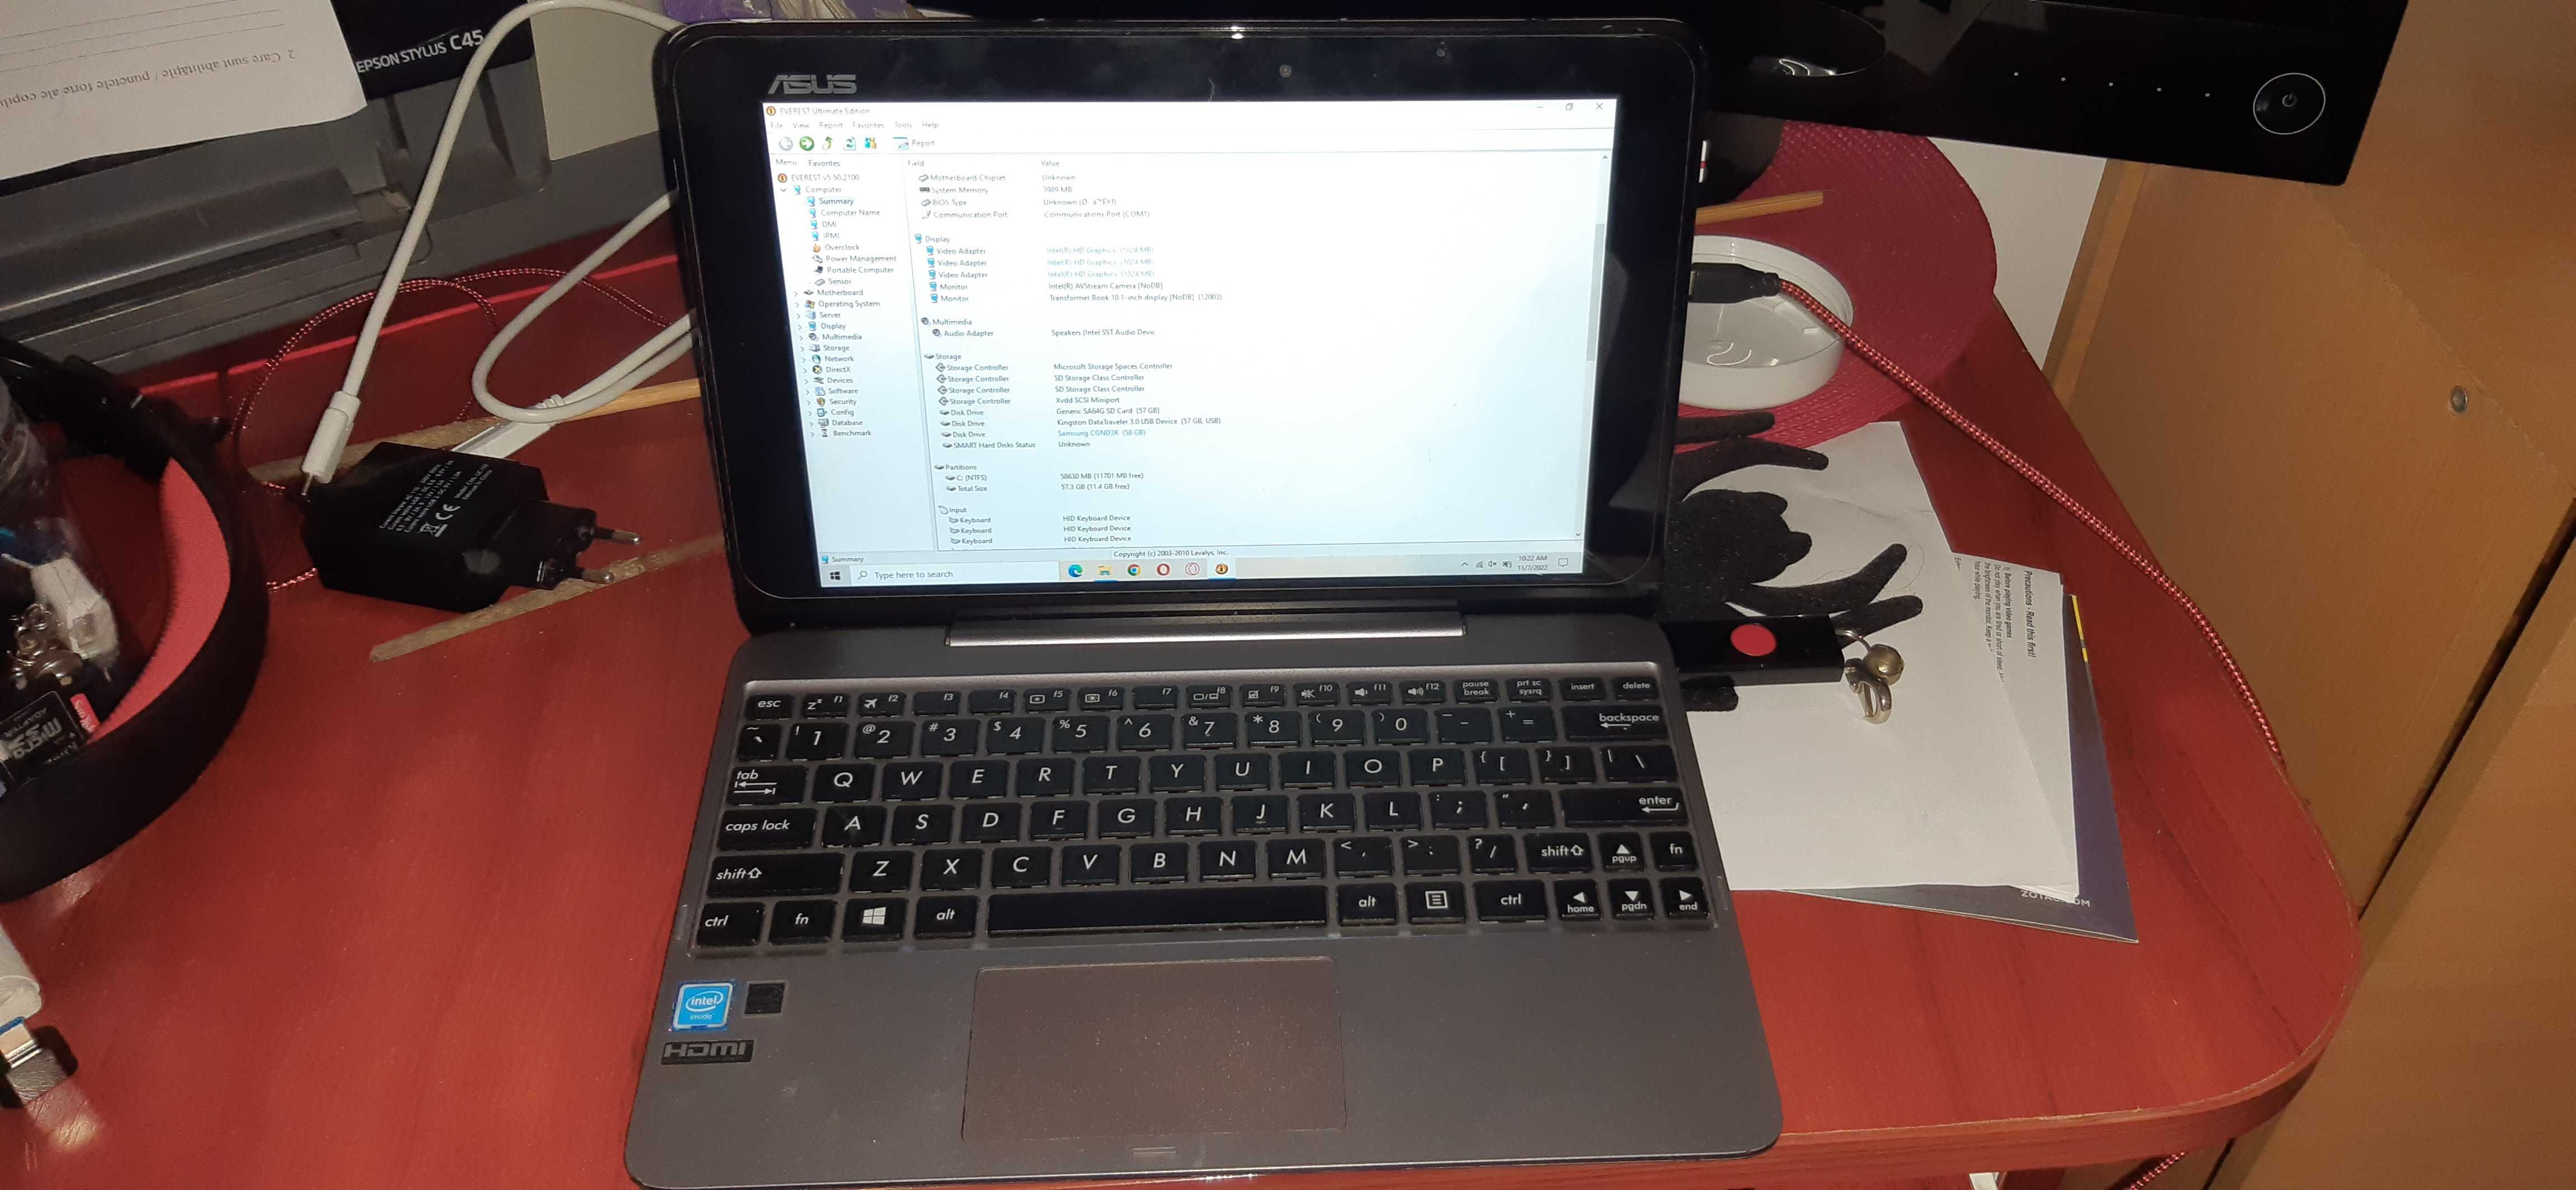 Mini laptop ASUS T100HA 4 gb RAM, 64 gb